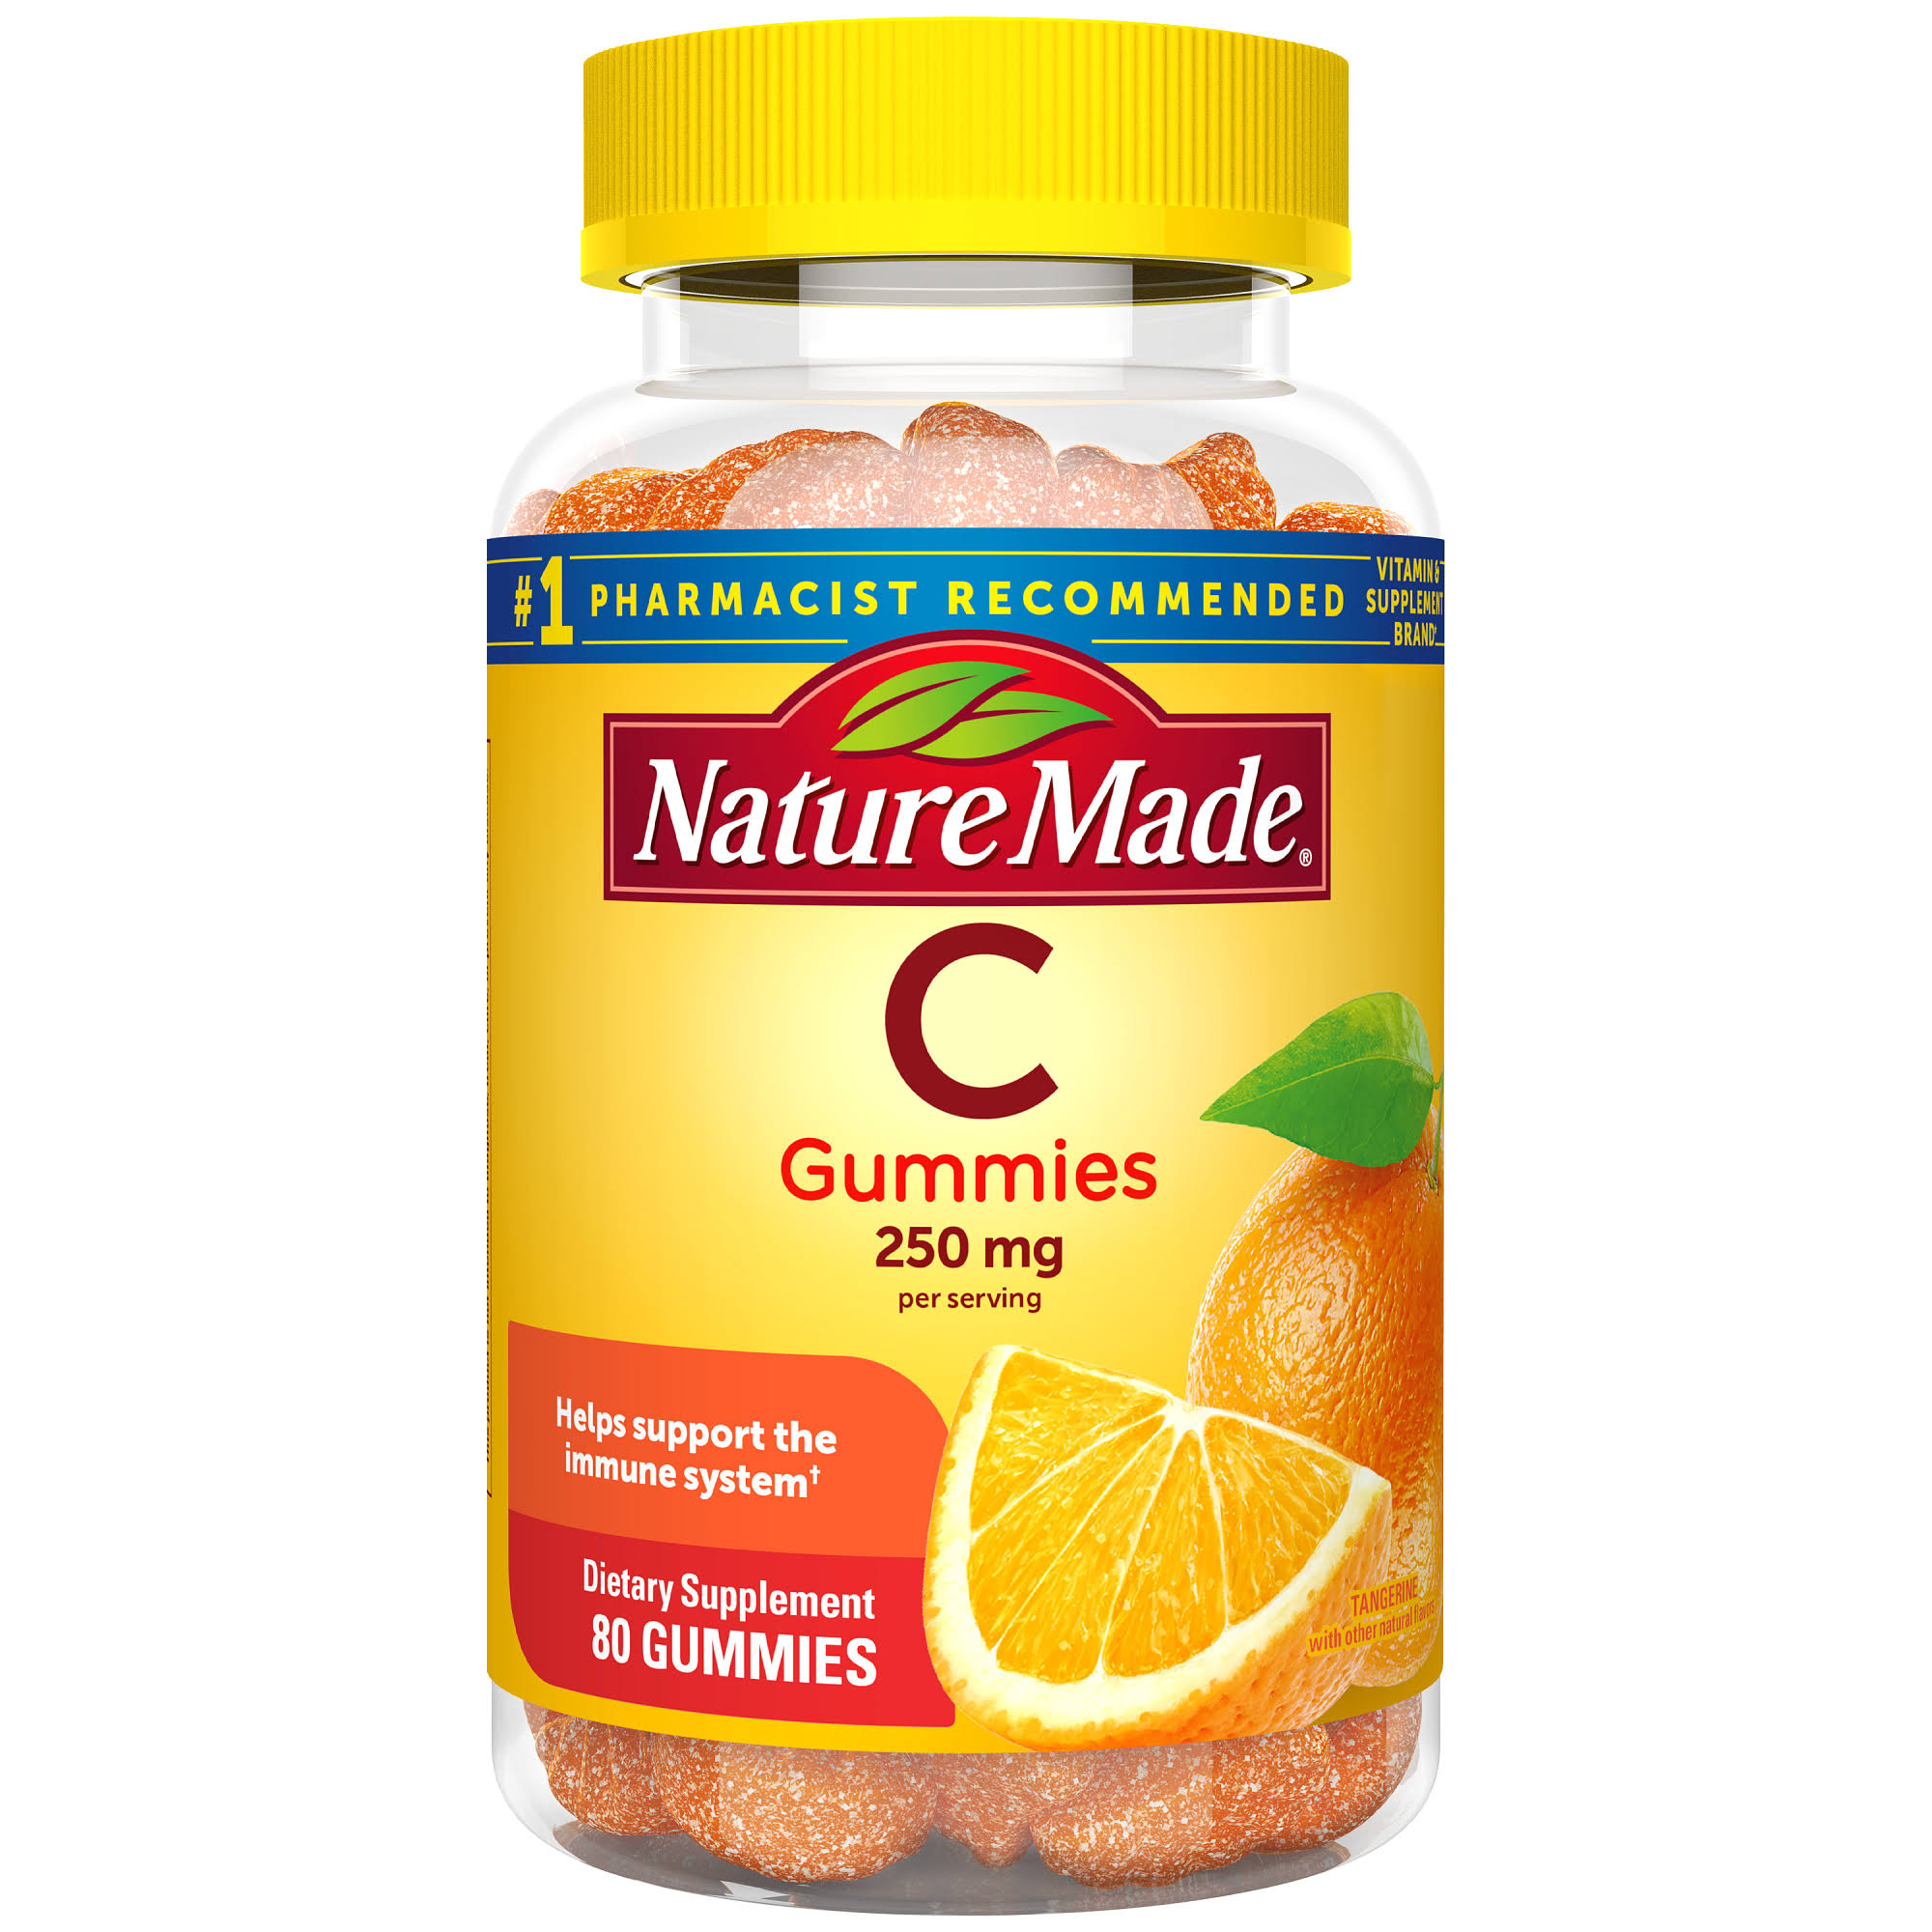 Nature Made Vitamin C Adult Gummies Immune System Support All Natural Care - Orange, 80ct